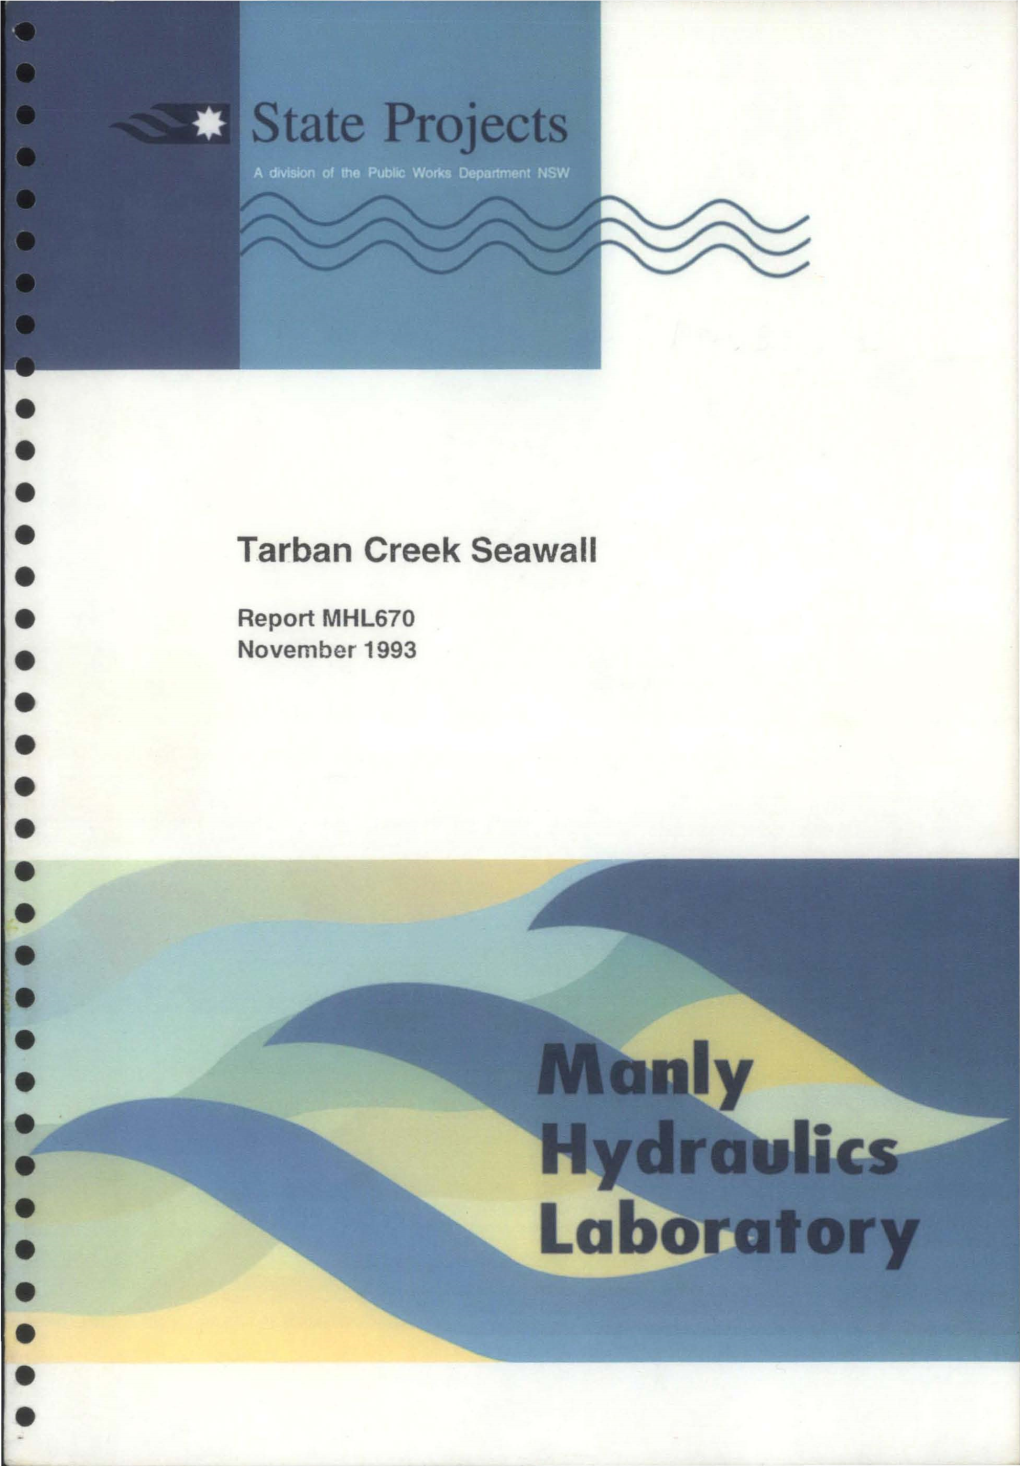 Tarban Creek Seawall